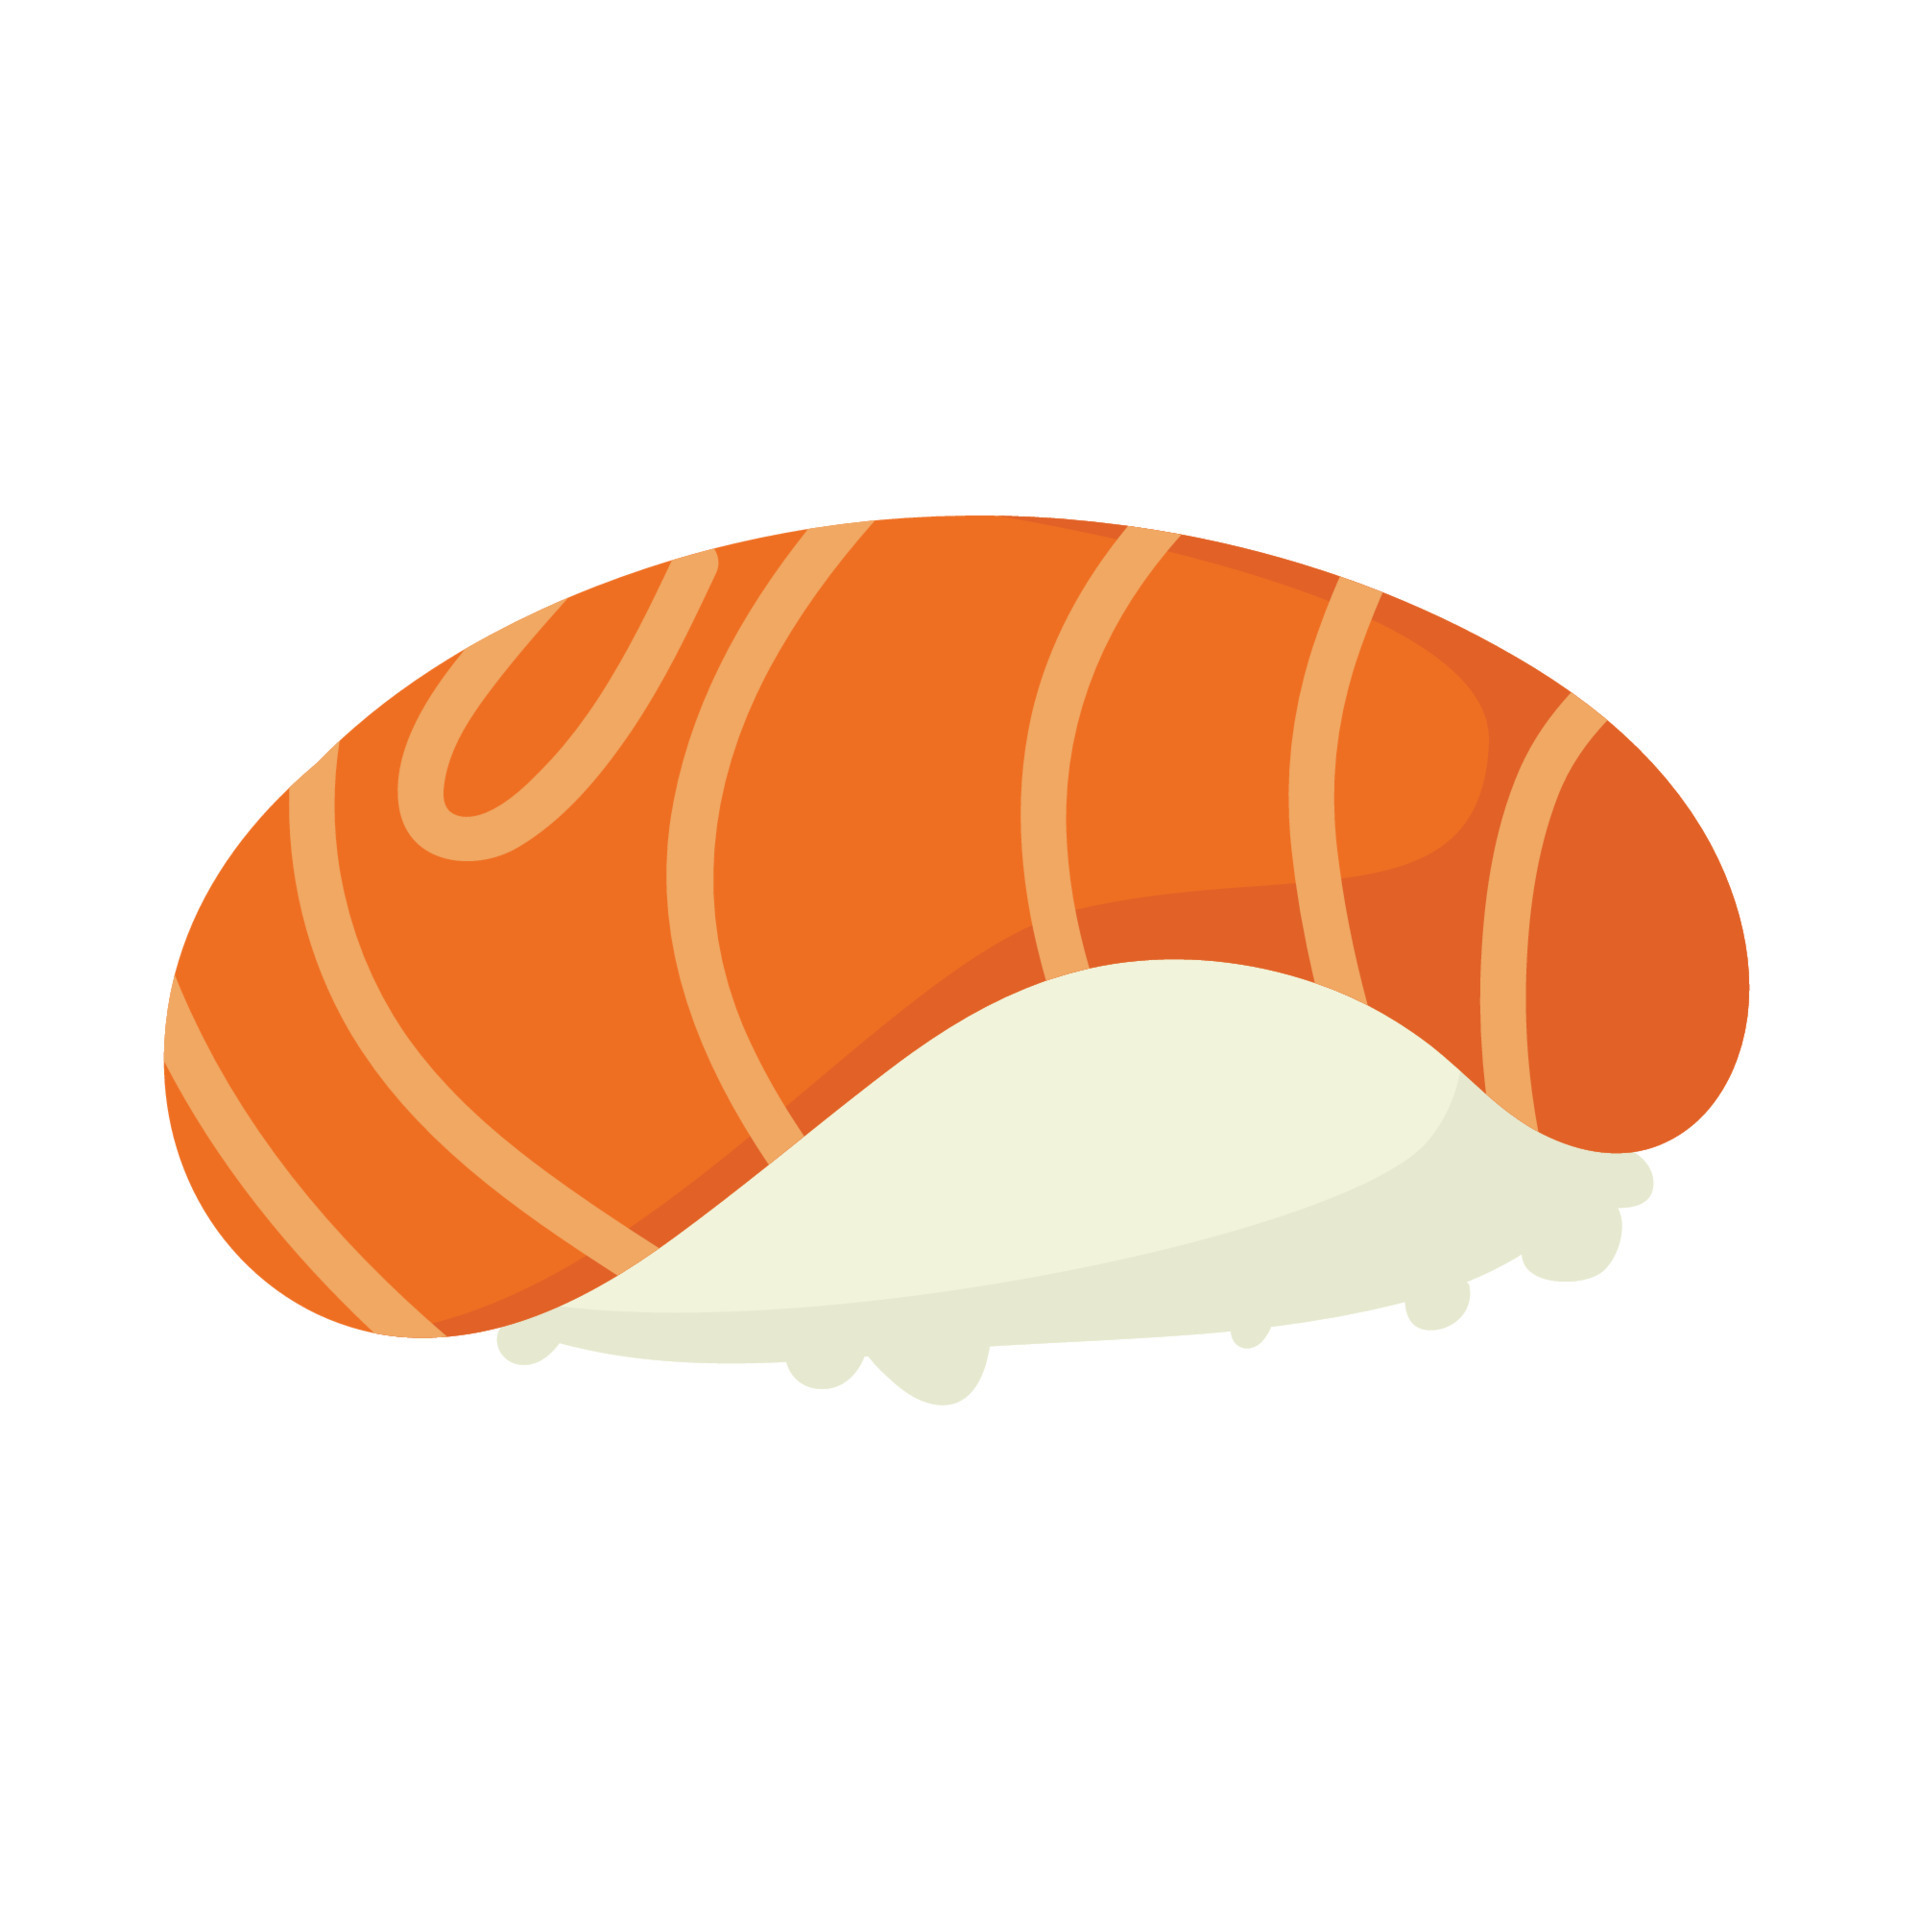 Pixel art temaki sushi, ícone vetorial de comida japonesa para